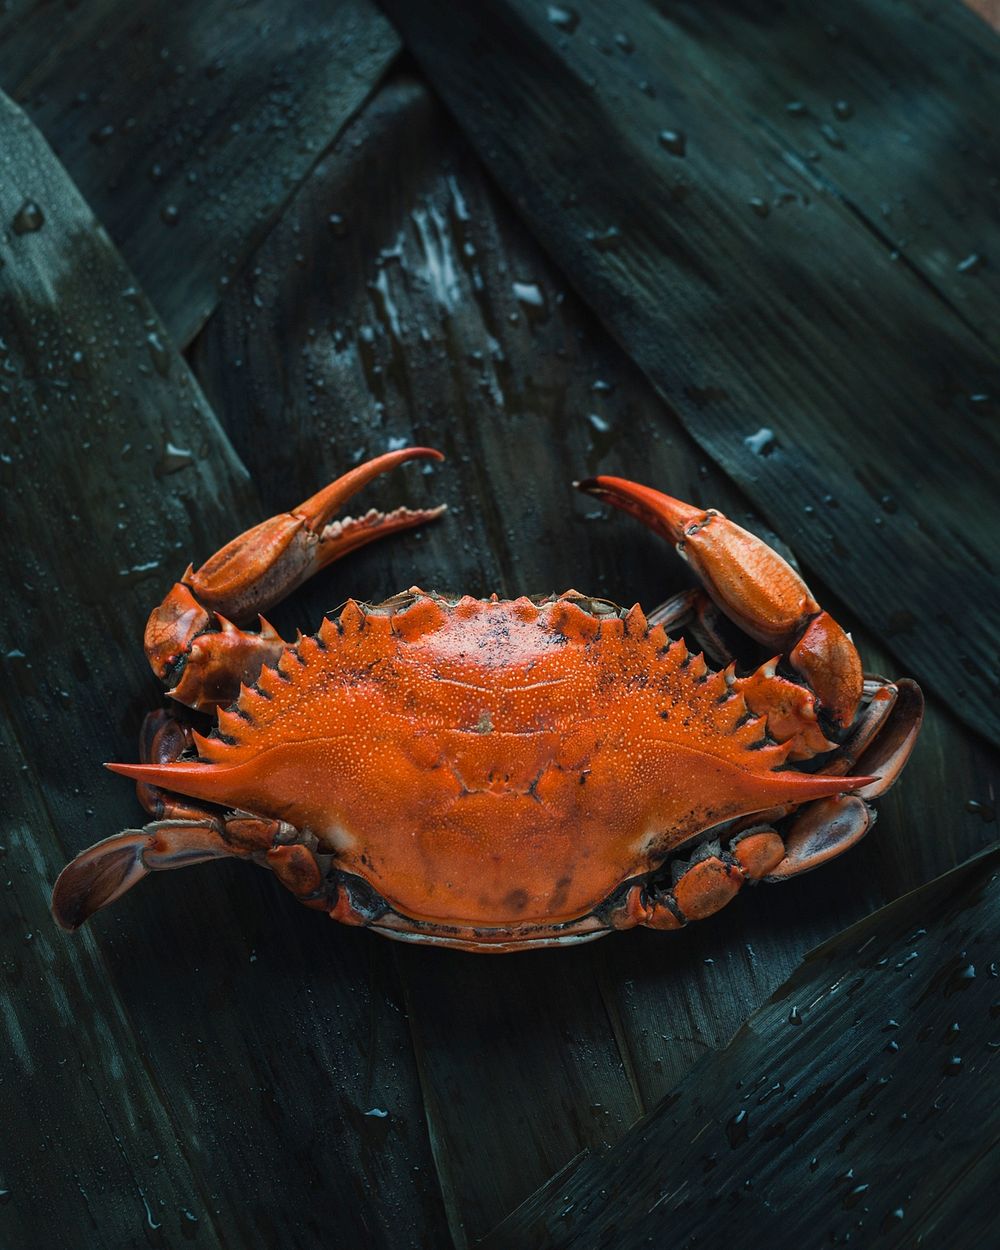 Free soft shell crab image, public domain nature CC0 photo.